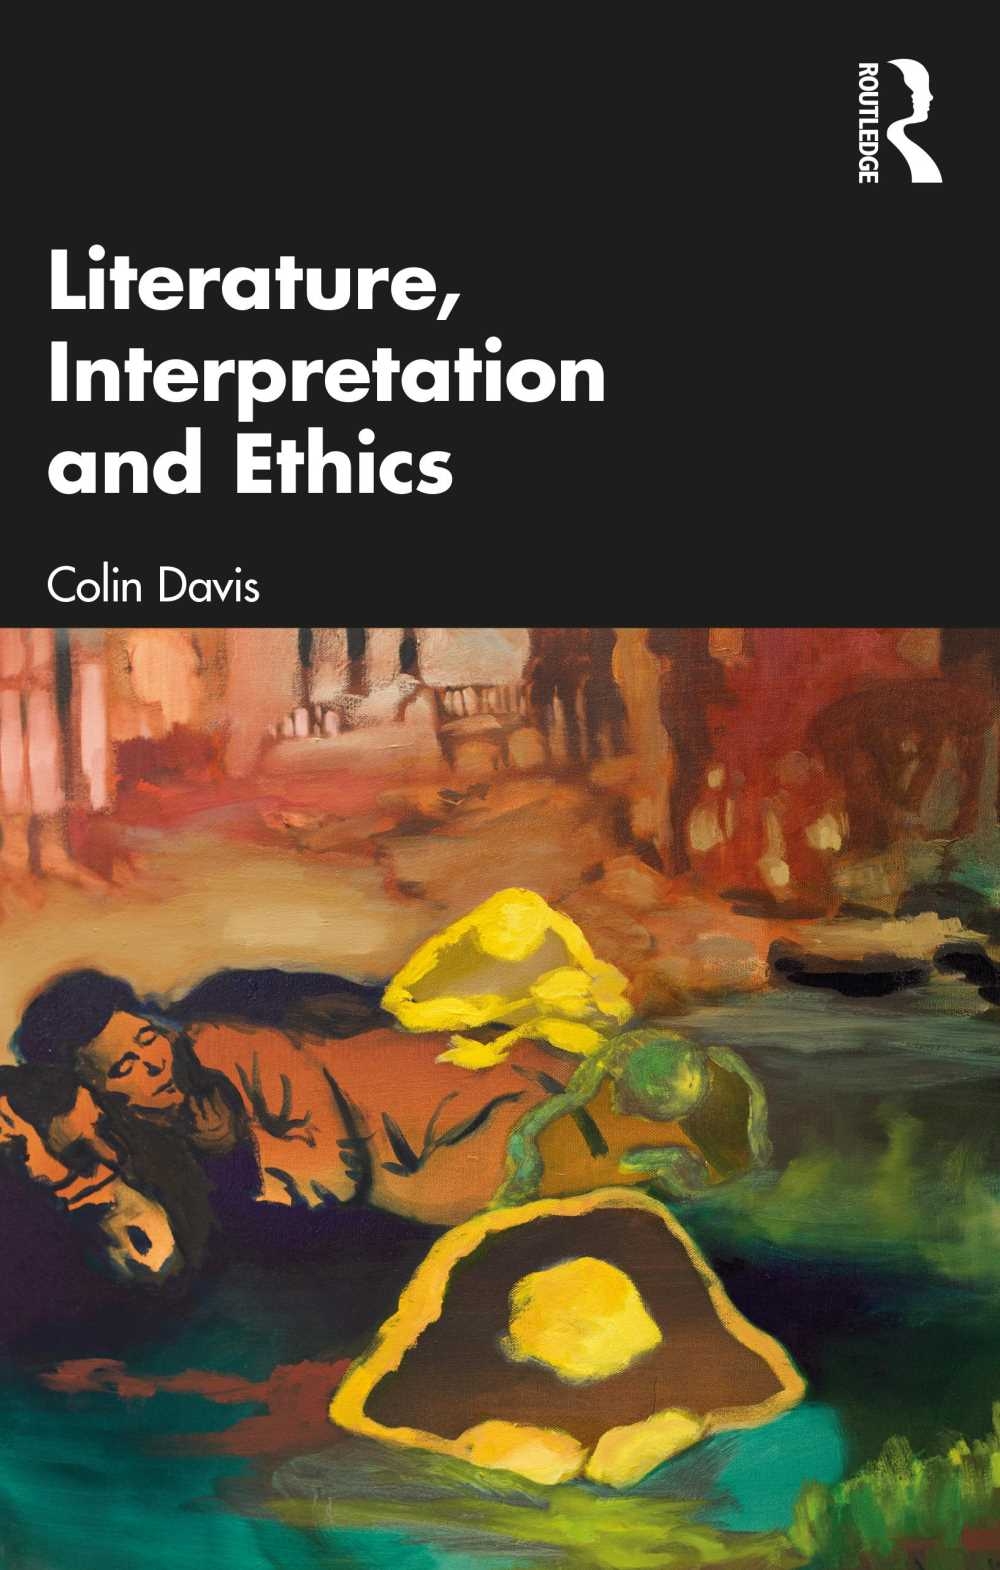 Literature, Interpretation, Ethics